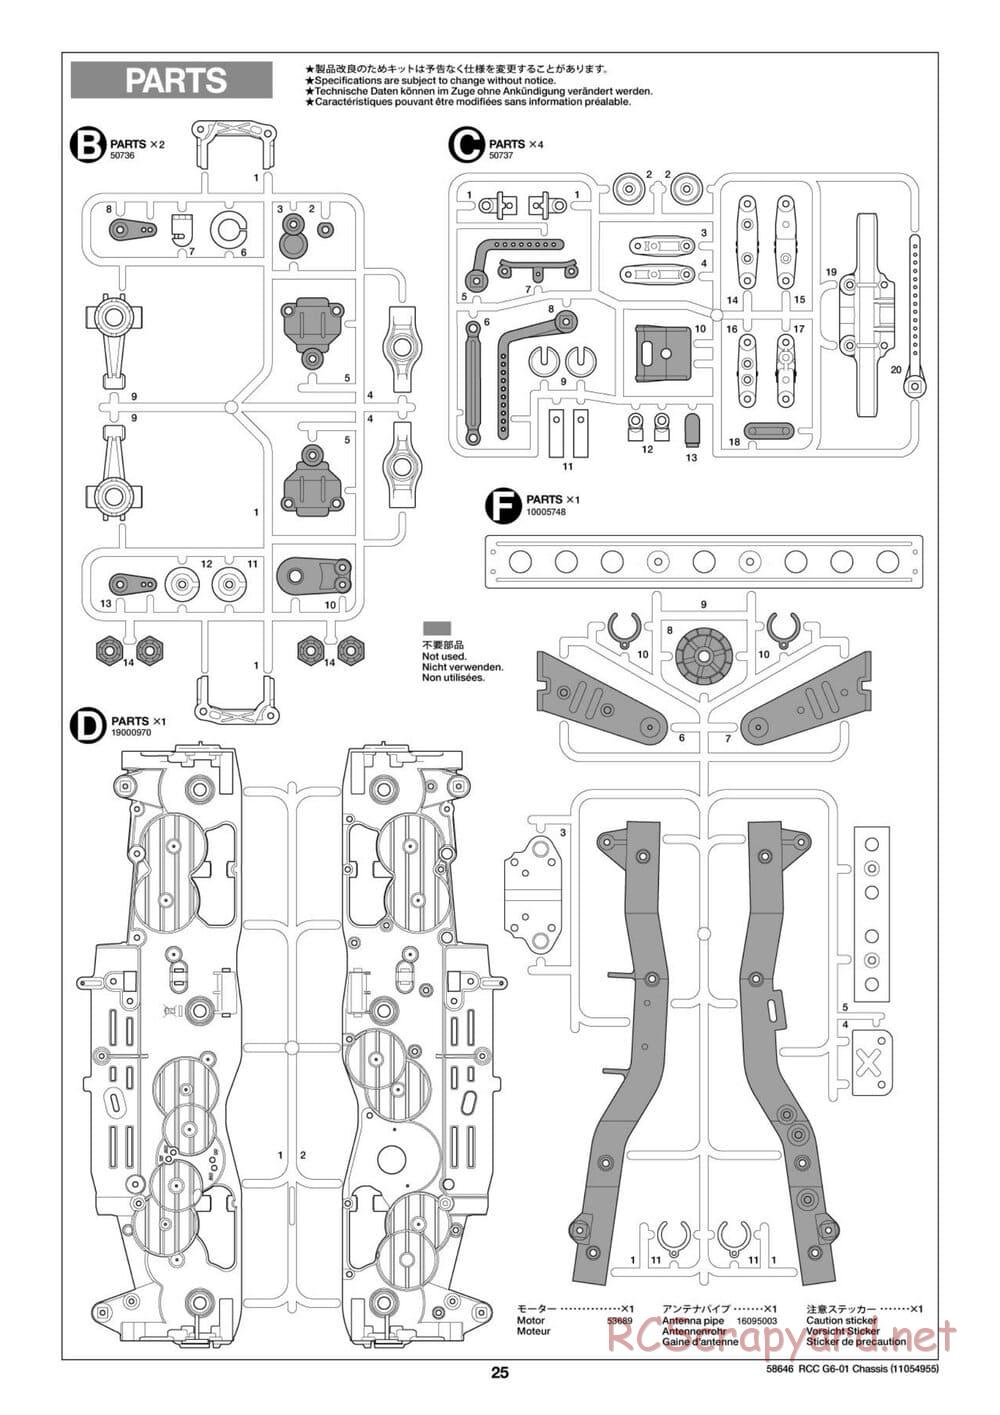 Tamiya - Konghead 6x6 - G6-01 Chassis - Manual - Page 25